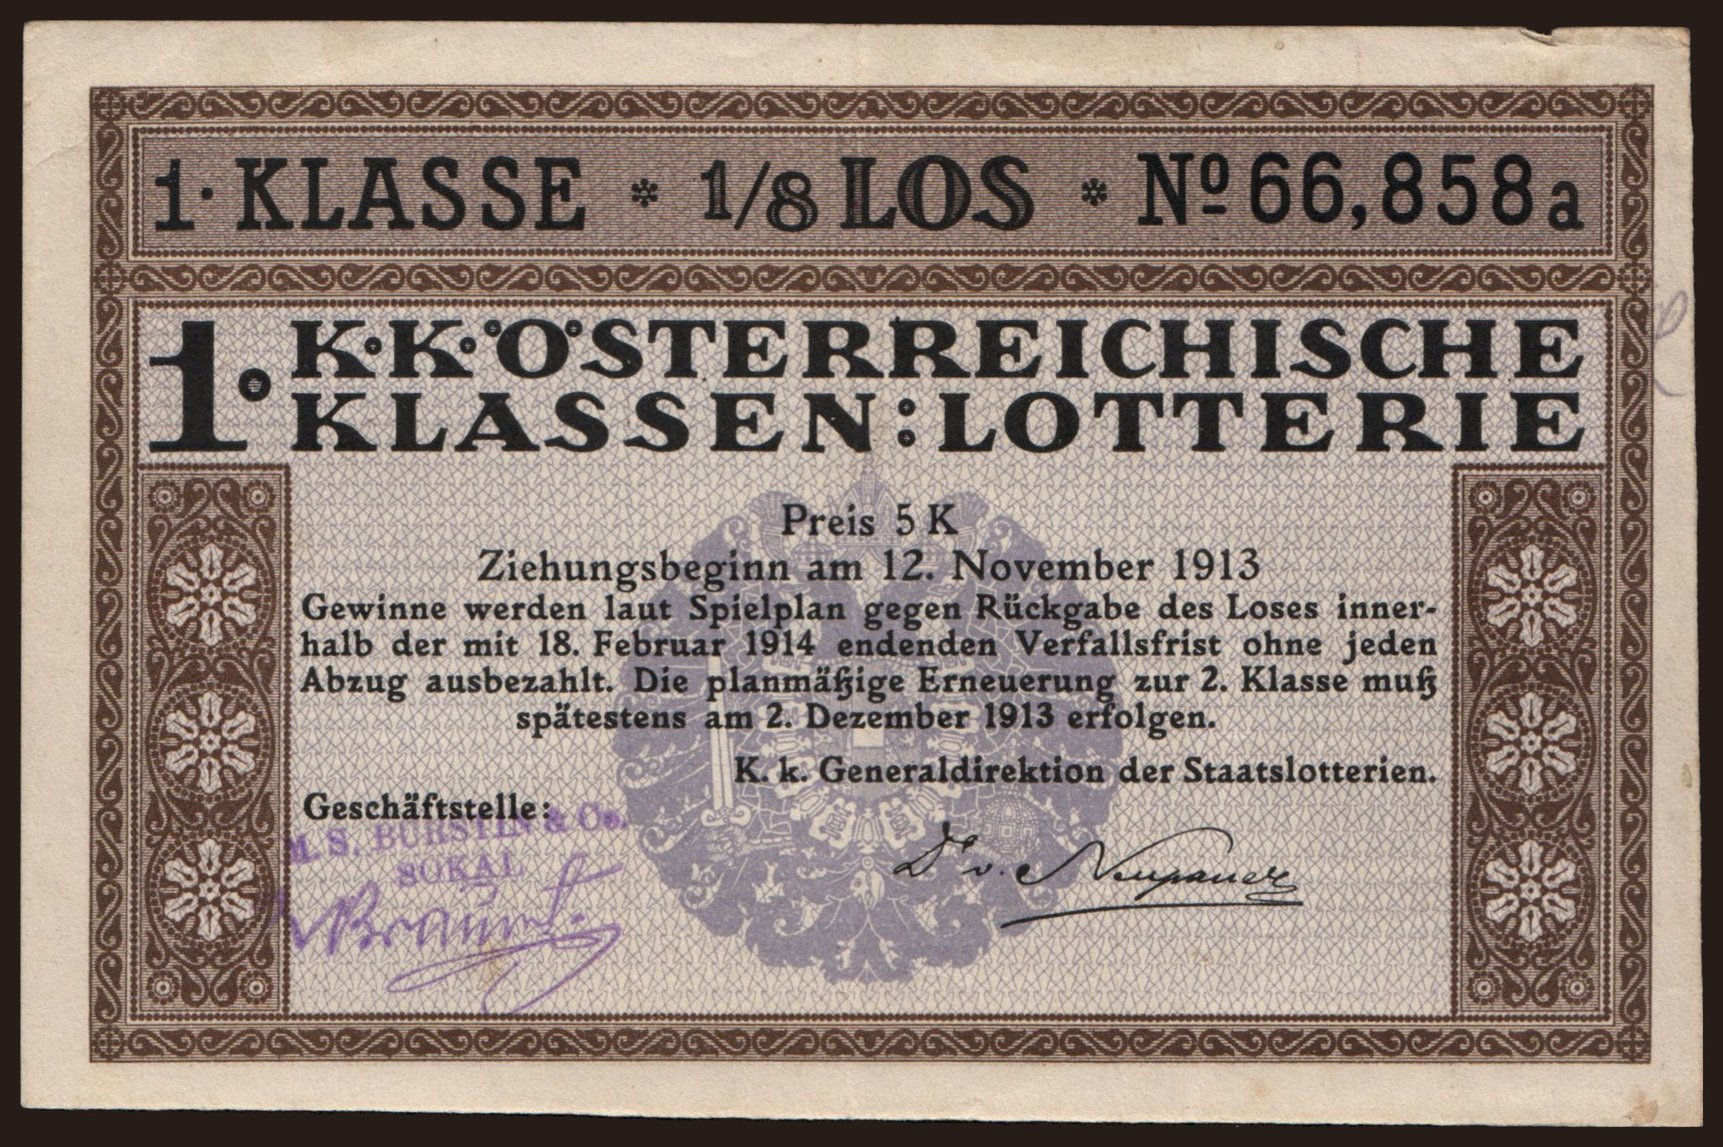 K.K. Österreichische Klassen-Lotterie, 1/8 Los, 1913